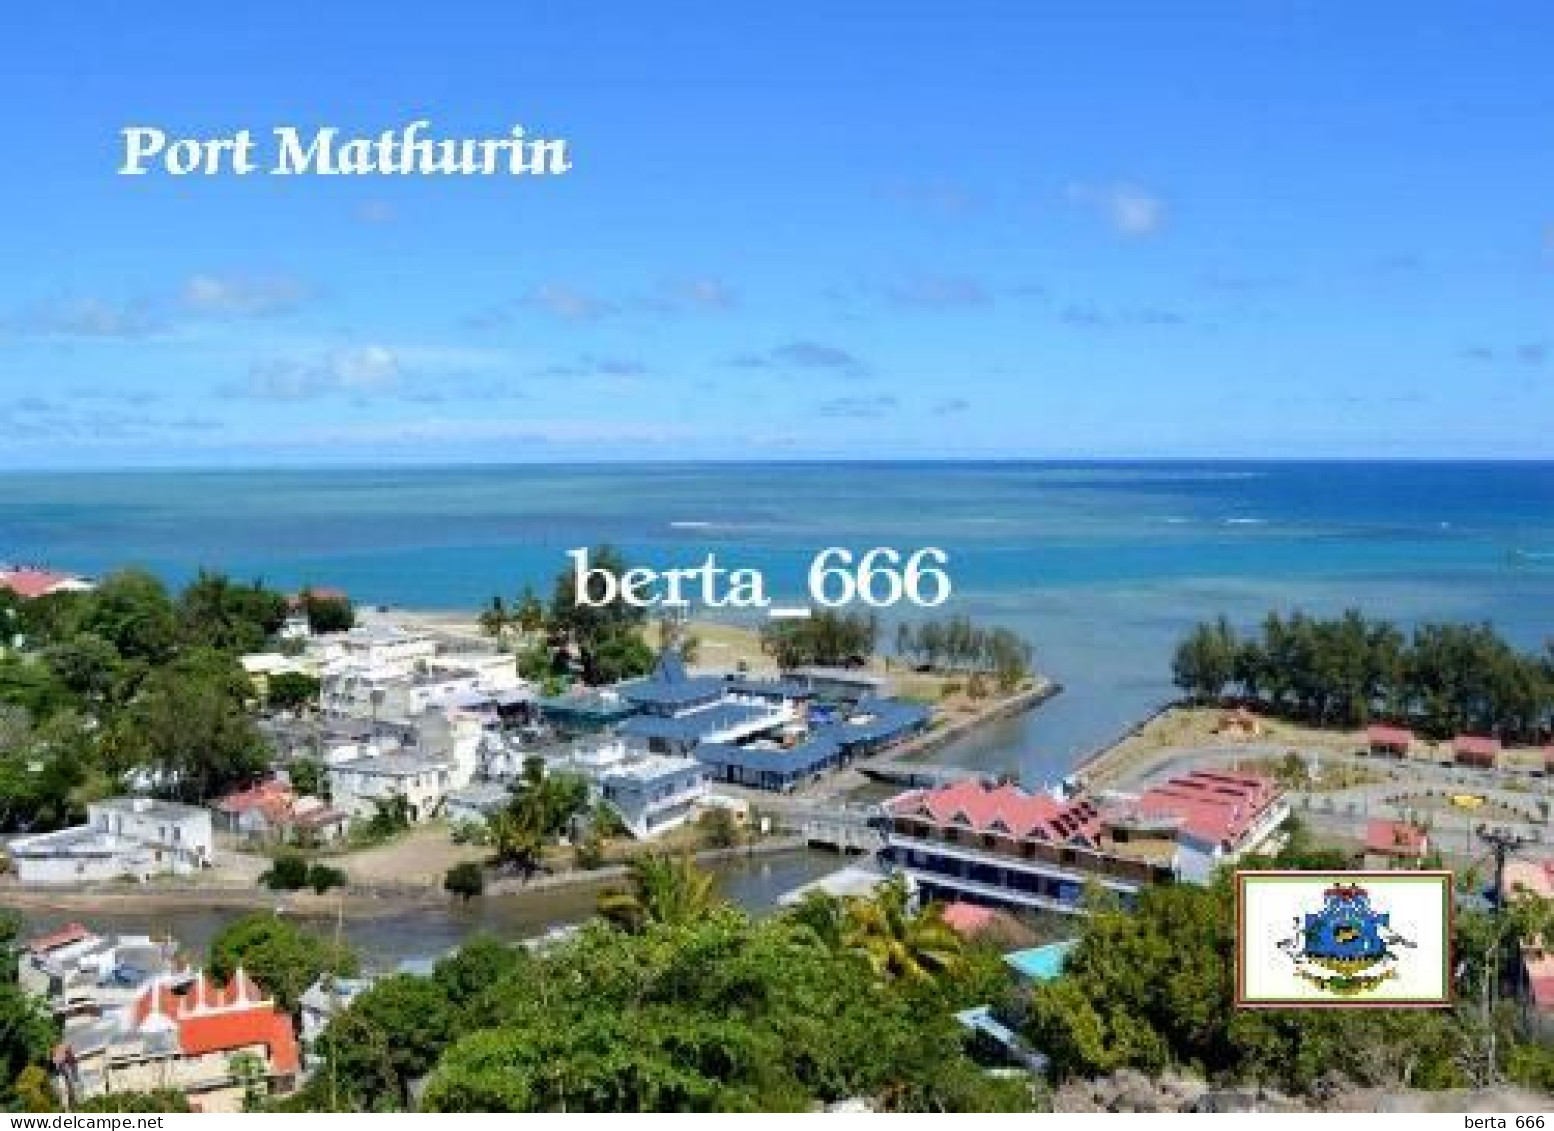 Mauritius Rodrigues Island Port Mathurin New Postcard - Mauritius